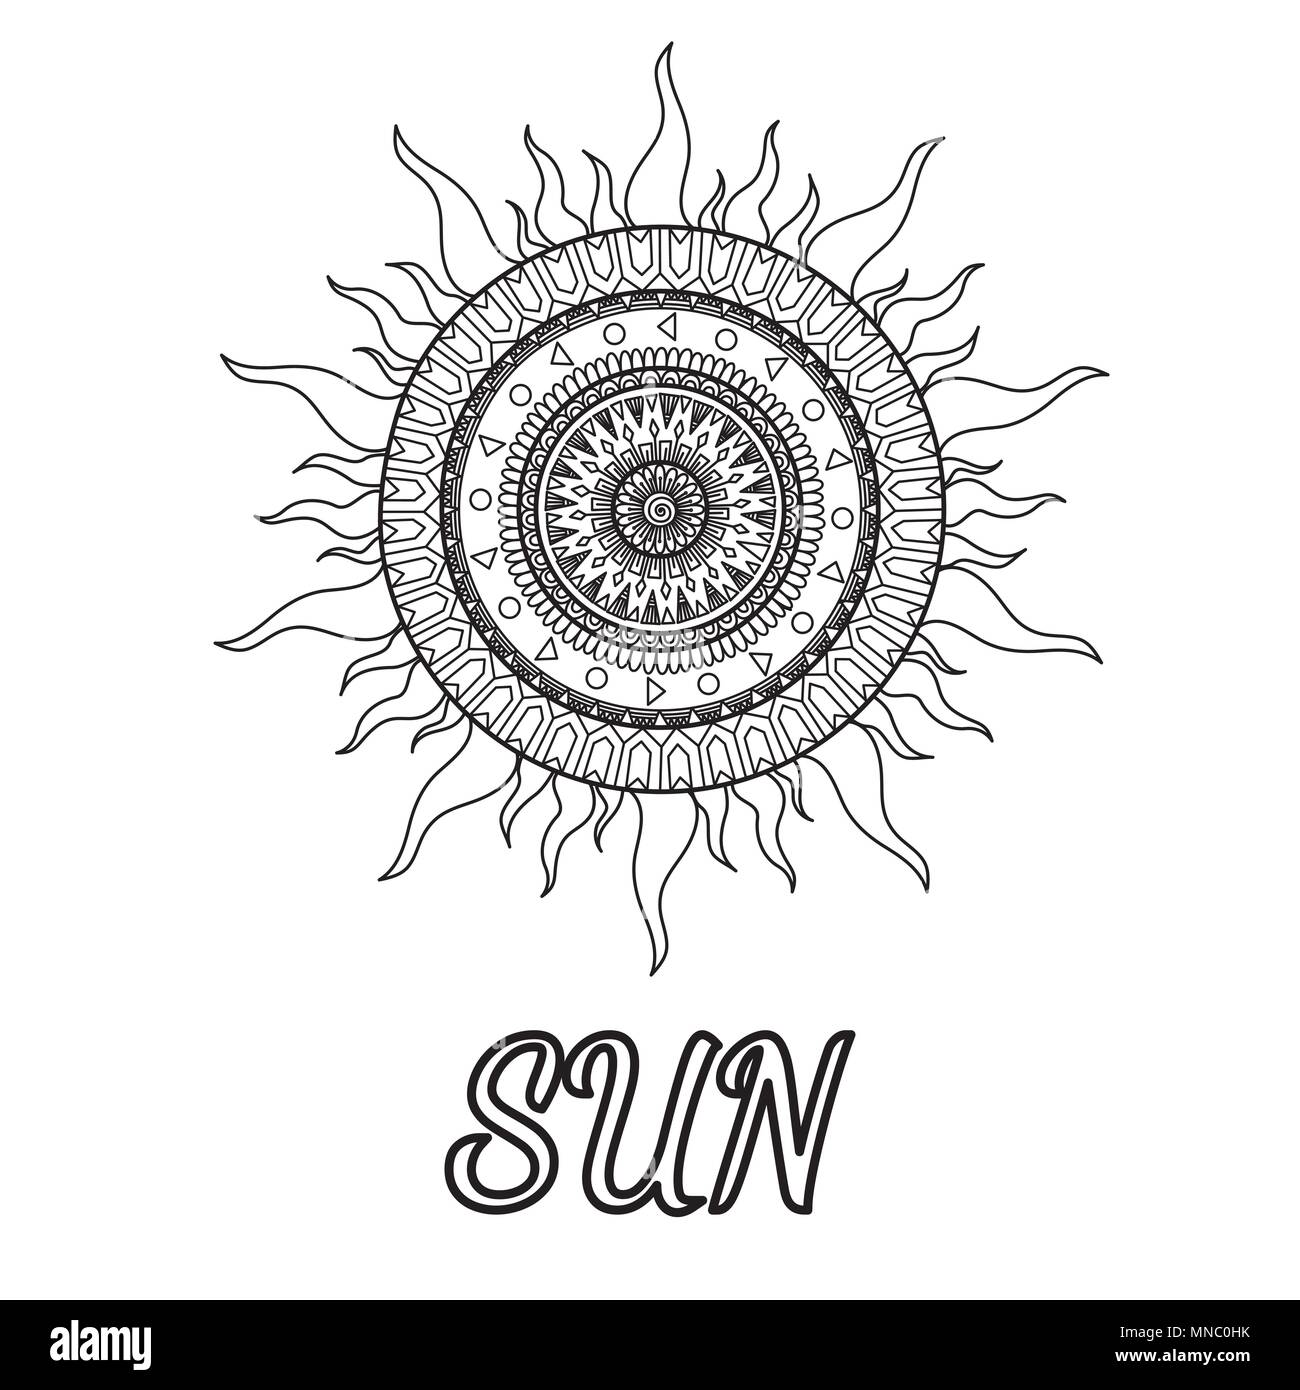 sun line art